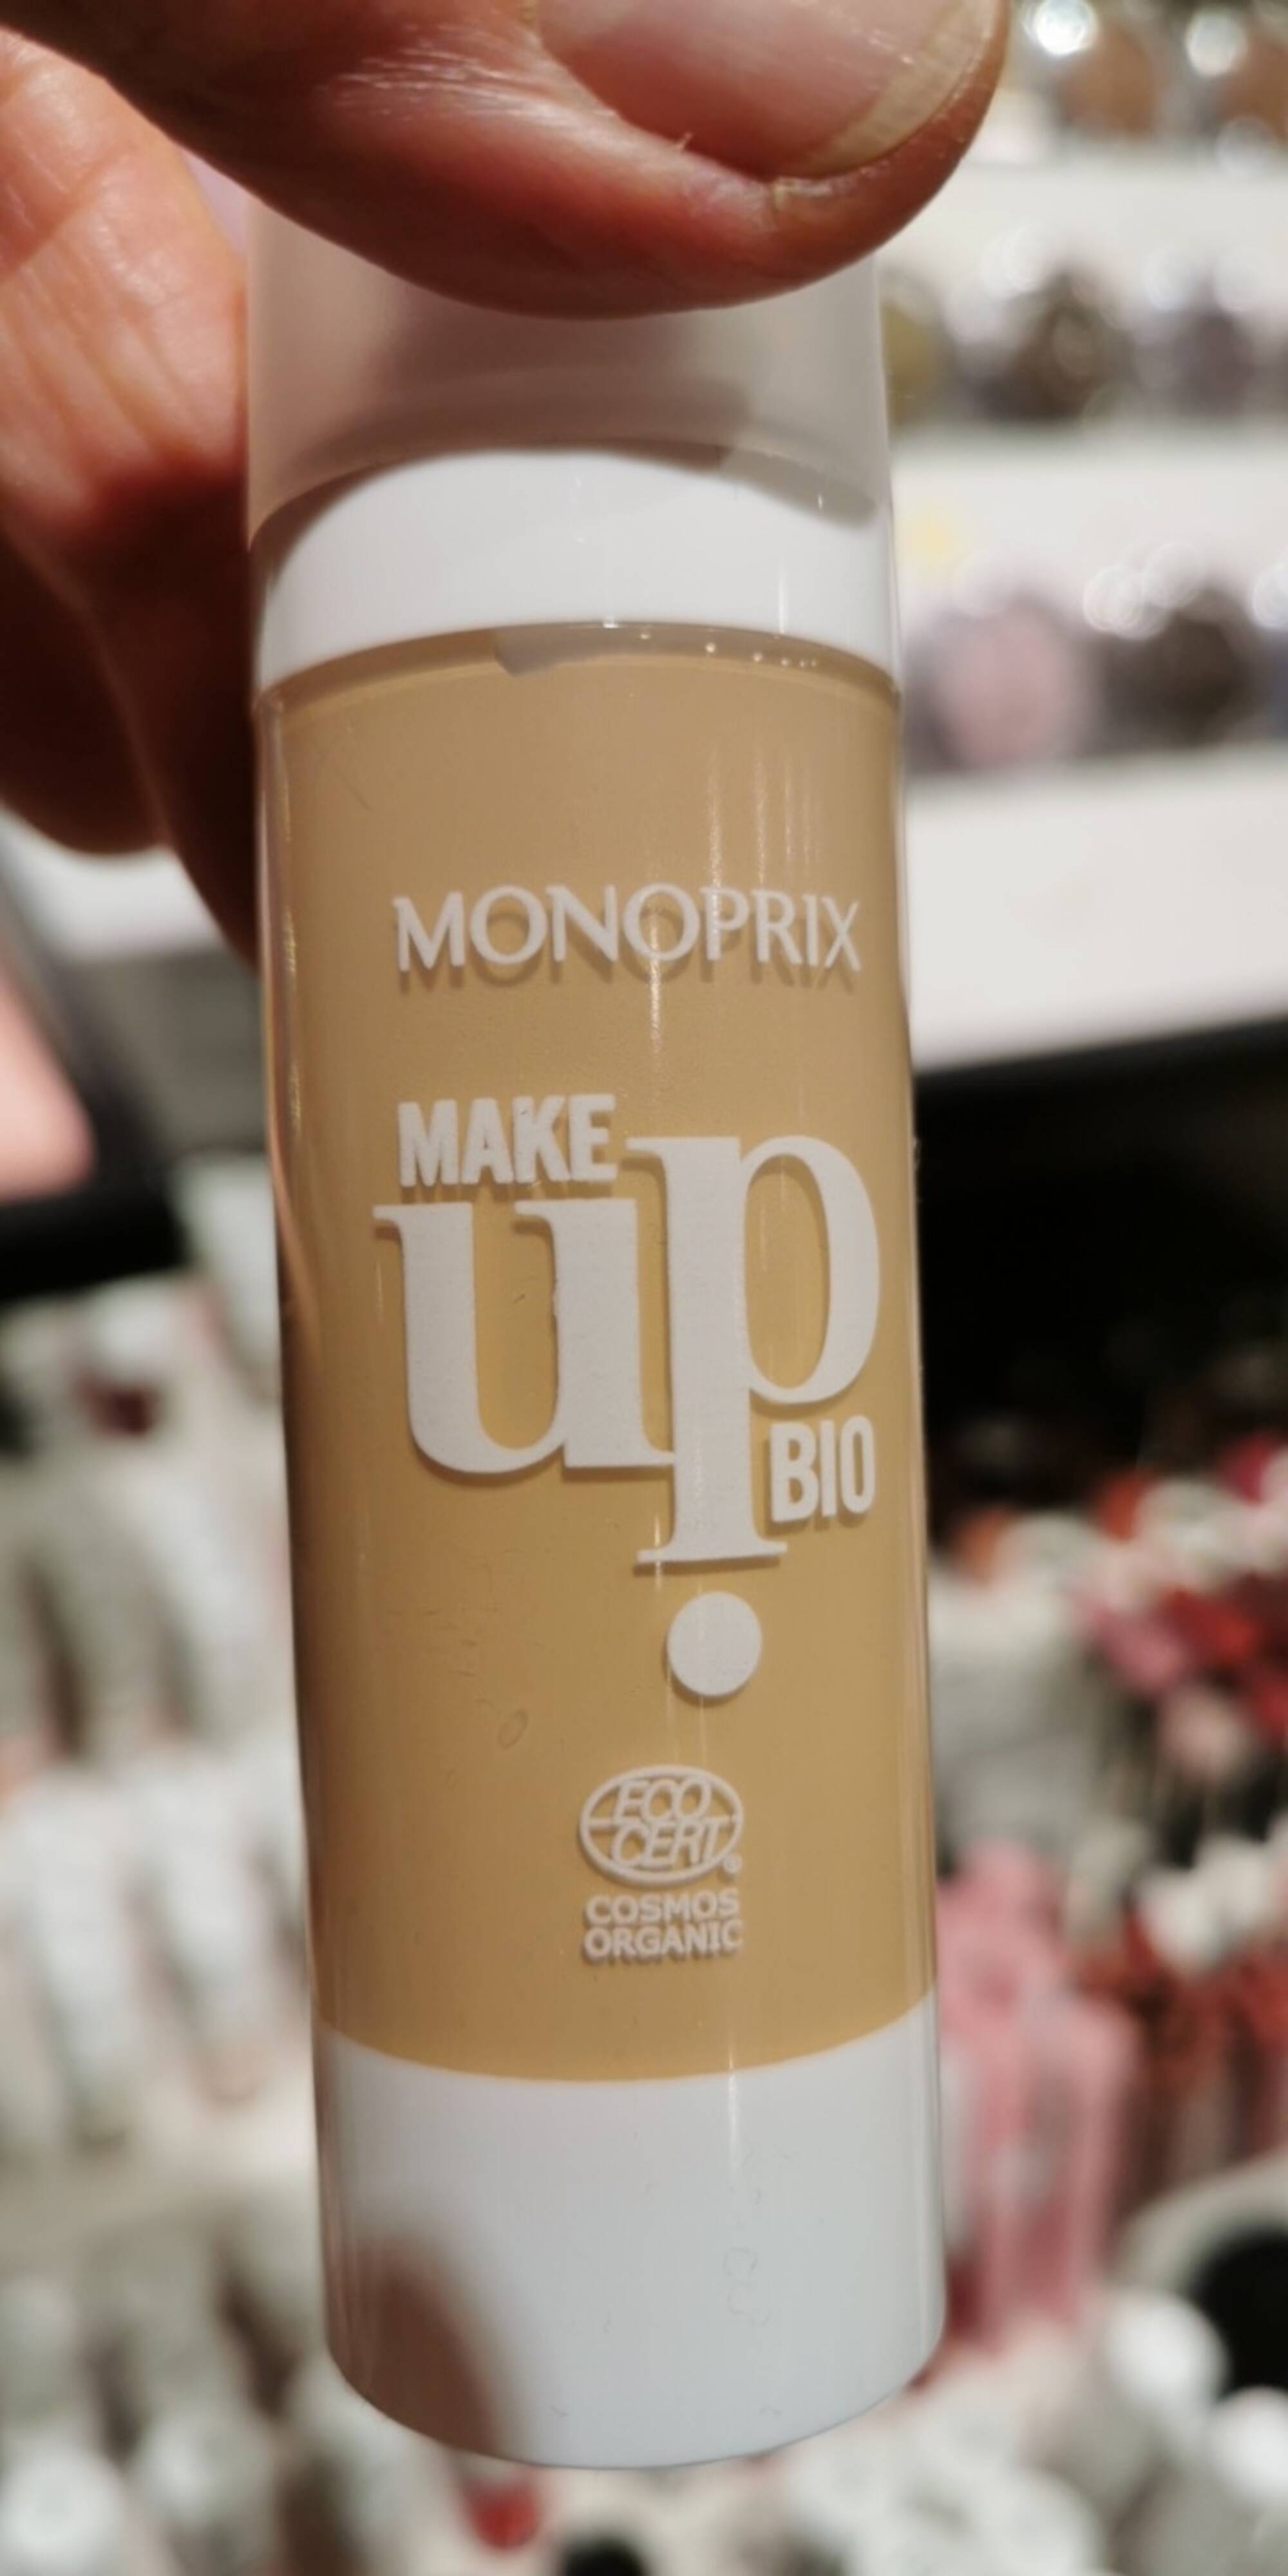 MONOPRIX - Make up bio - Fond de teint liquide 03 beige rosé